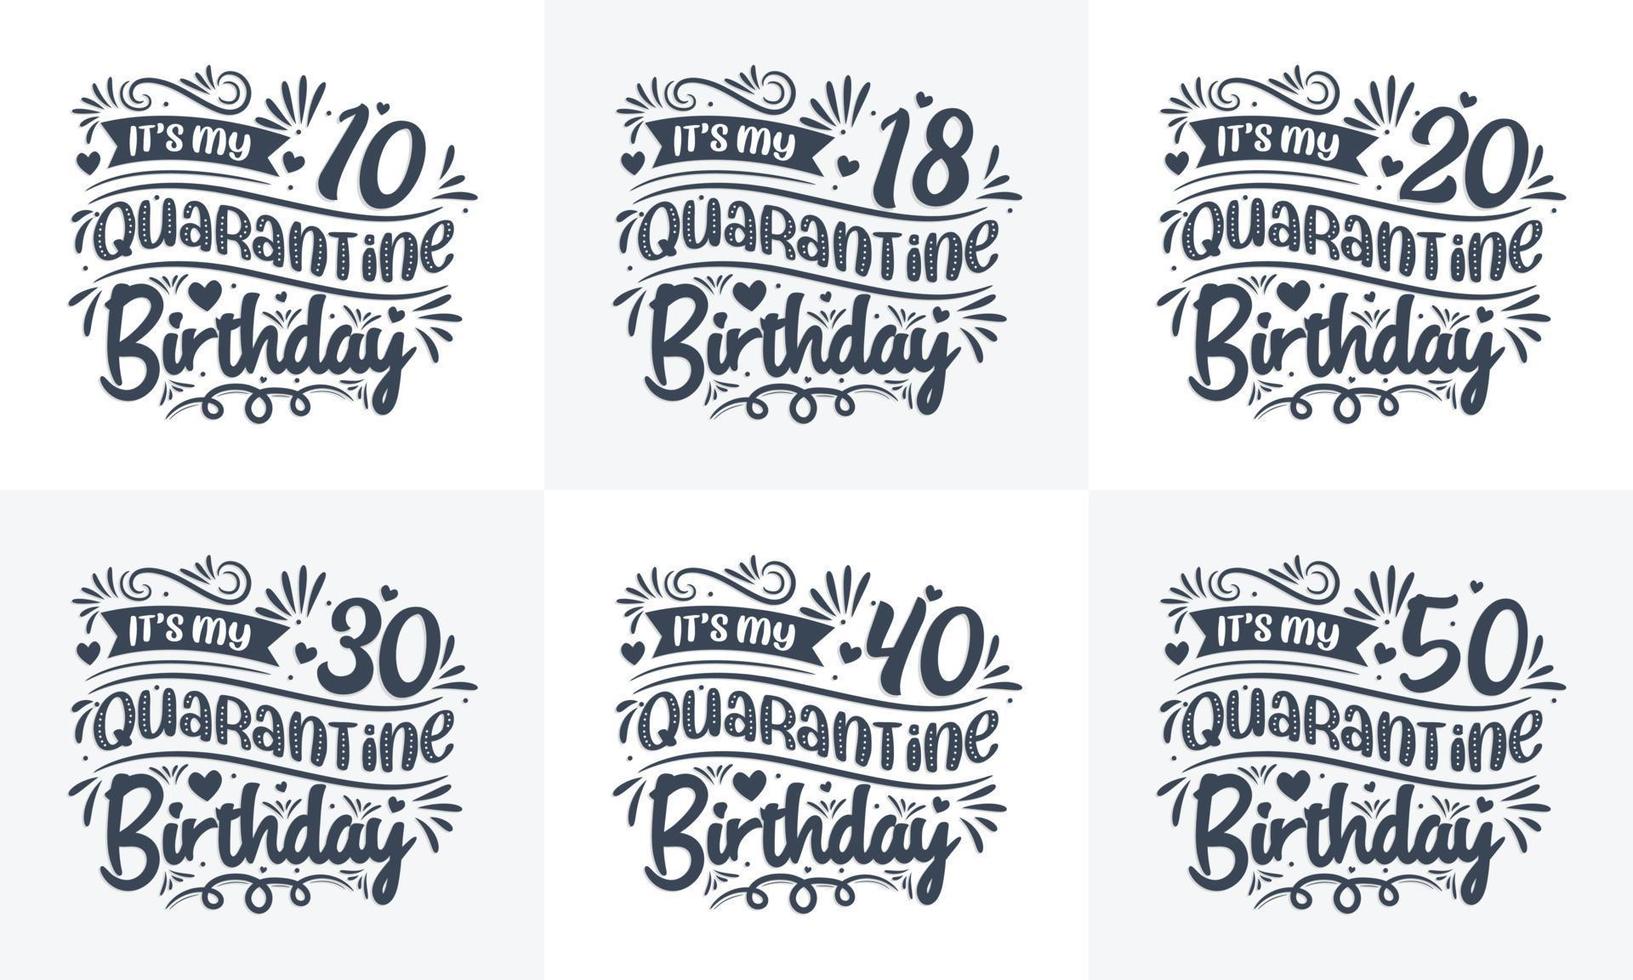 Quarantäne-Geburtstags-Design-Set. Quarantäne-Geburtstagsfeier-Typografie-Zitat-Design-Paket. es ist mein 10., 18., 20., 30., 40., 50. Quarantäne-Geburtstag vektor